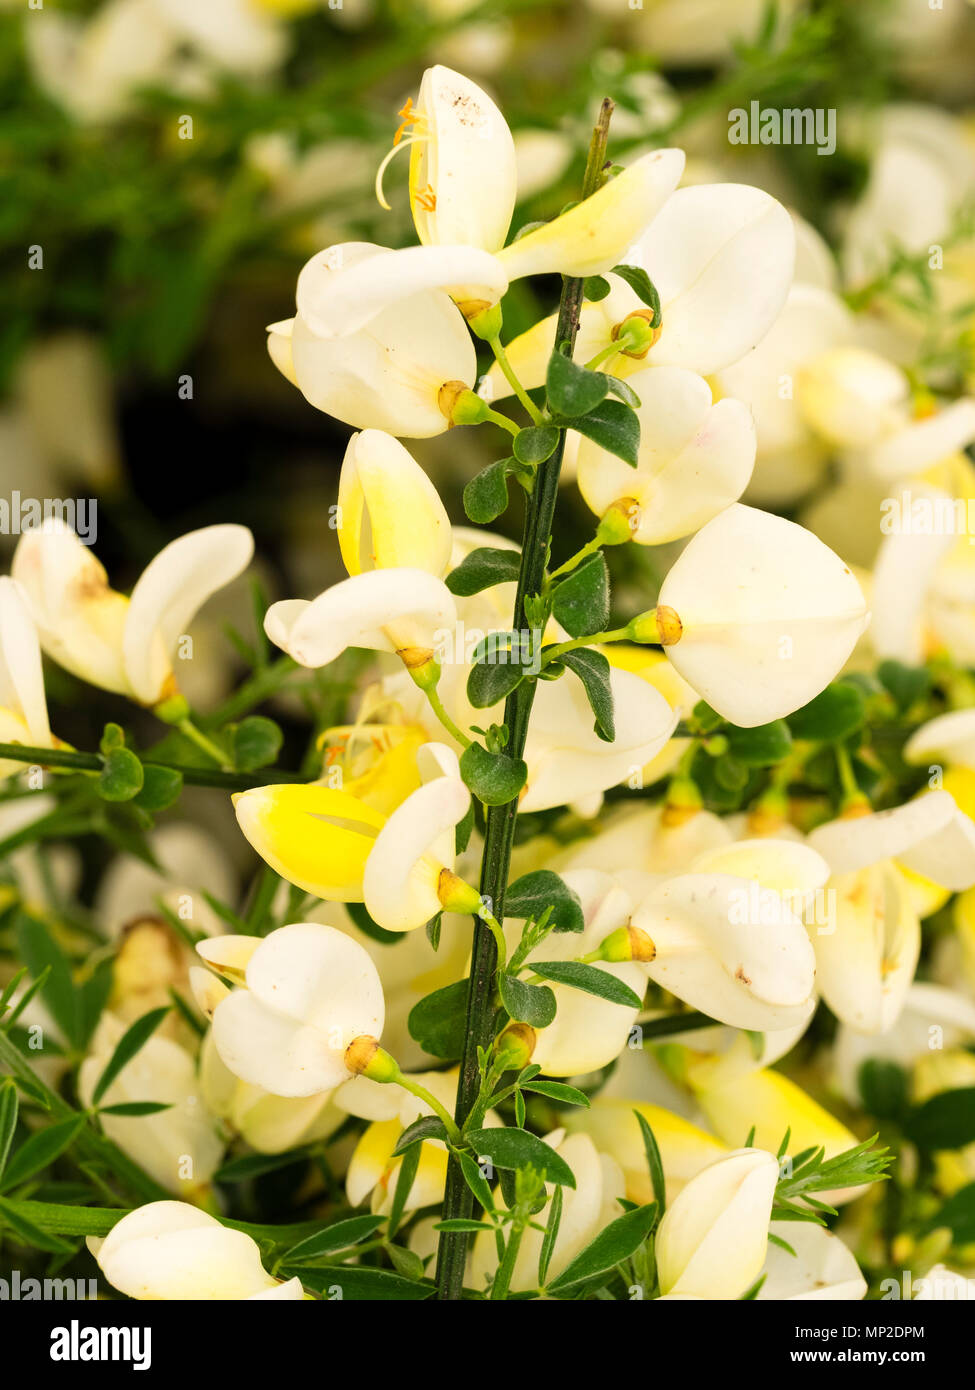 Cream and white flowers of the ornamental form of the evergreen, shrubby broom, Cytisus scoparius 'Cornish Cream' Stock Photo